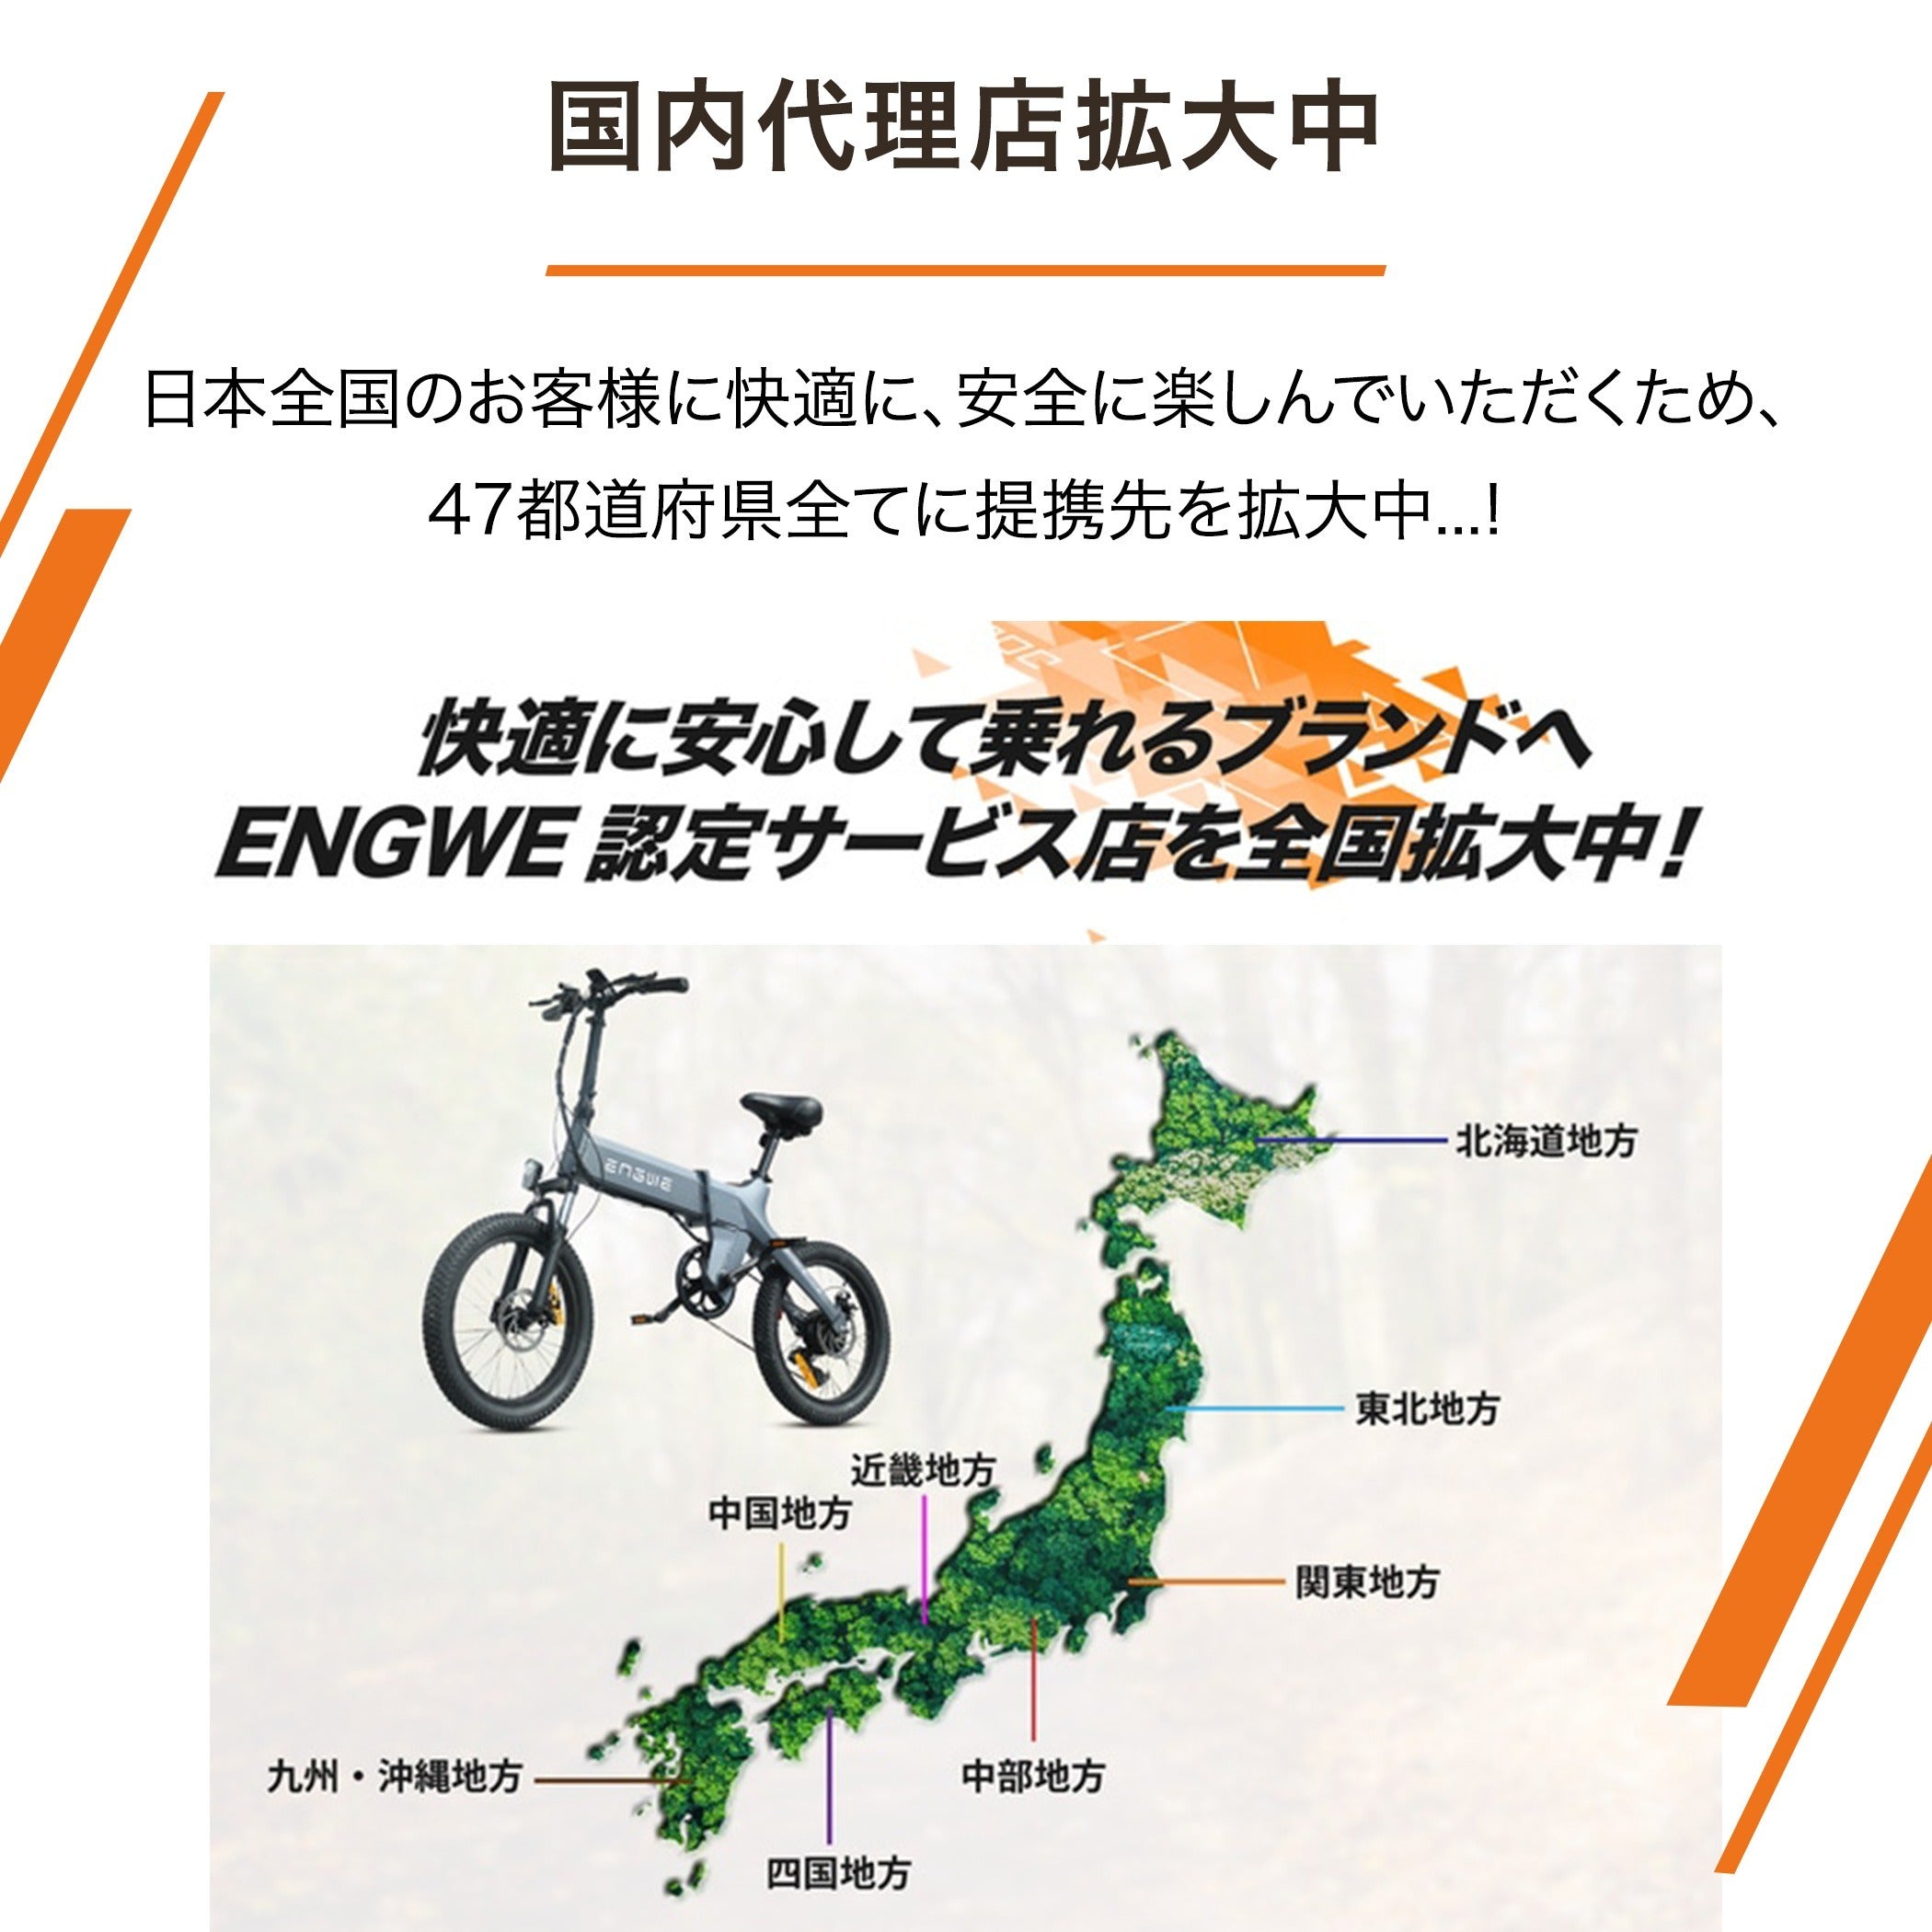 ENGWE BIKE – ENGWE JAPAN